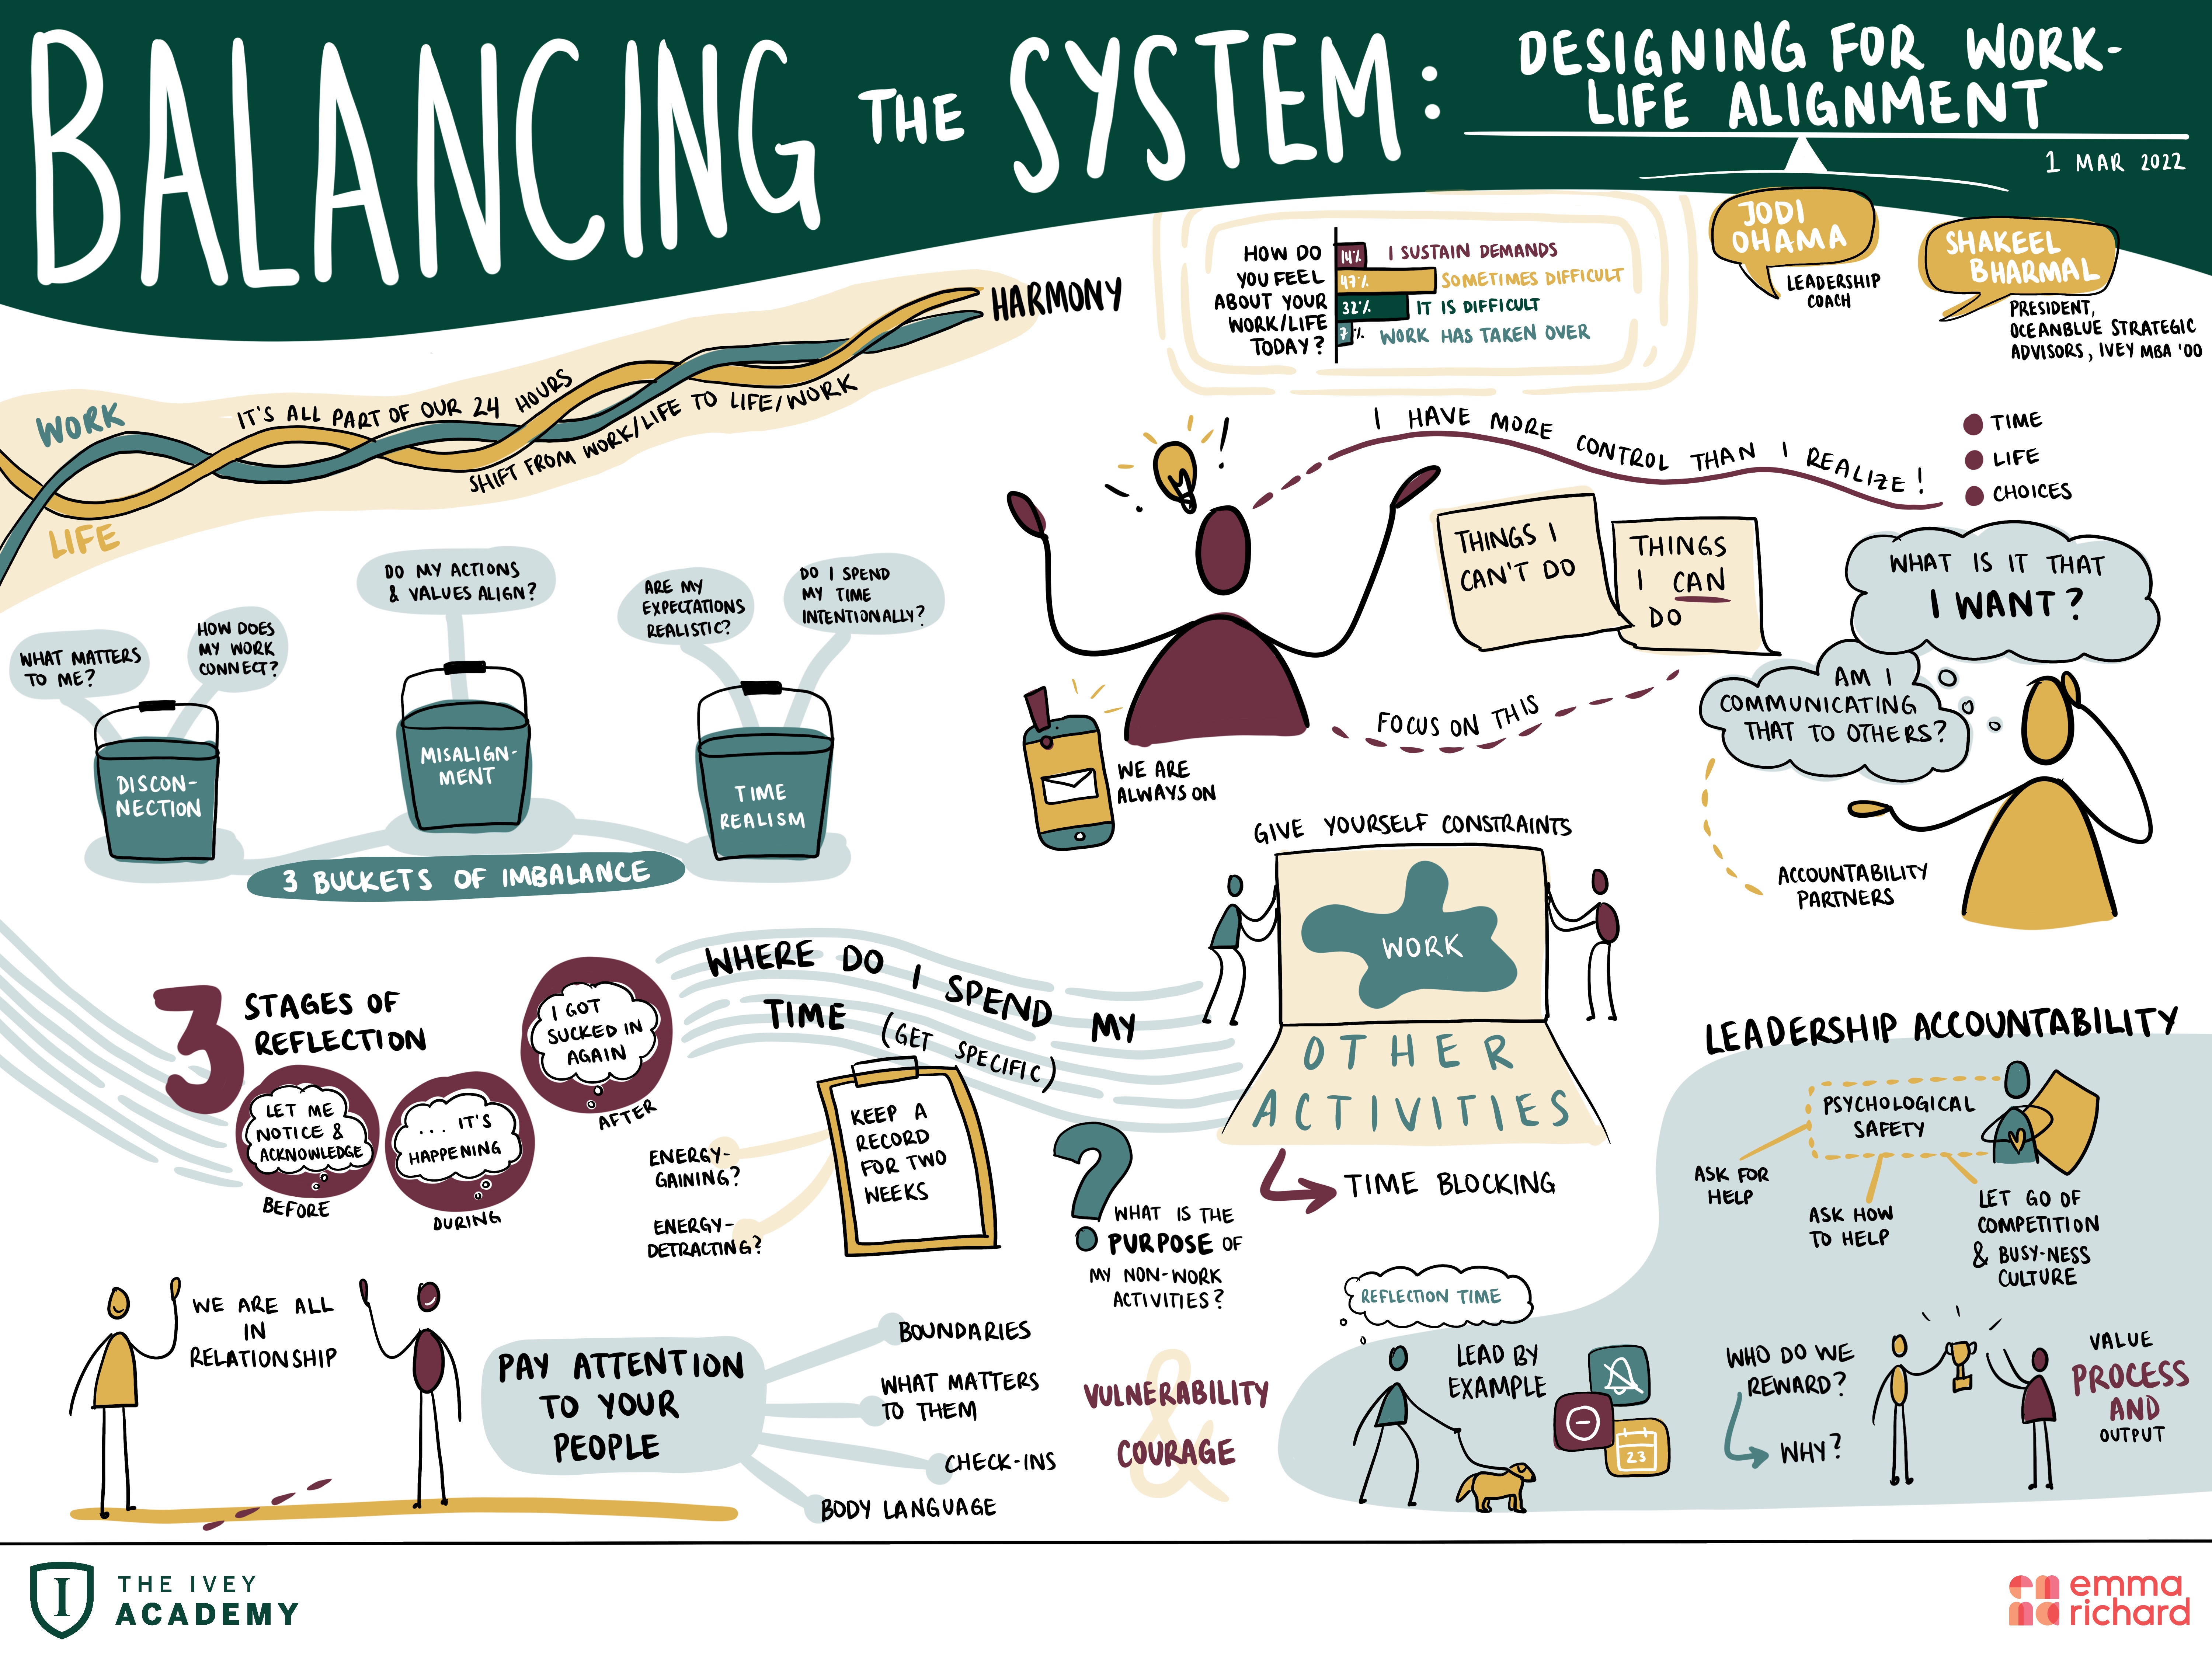 Balancing the System illustration by Emma Richard